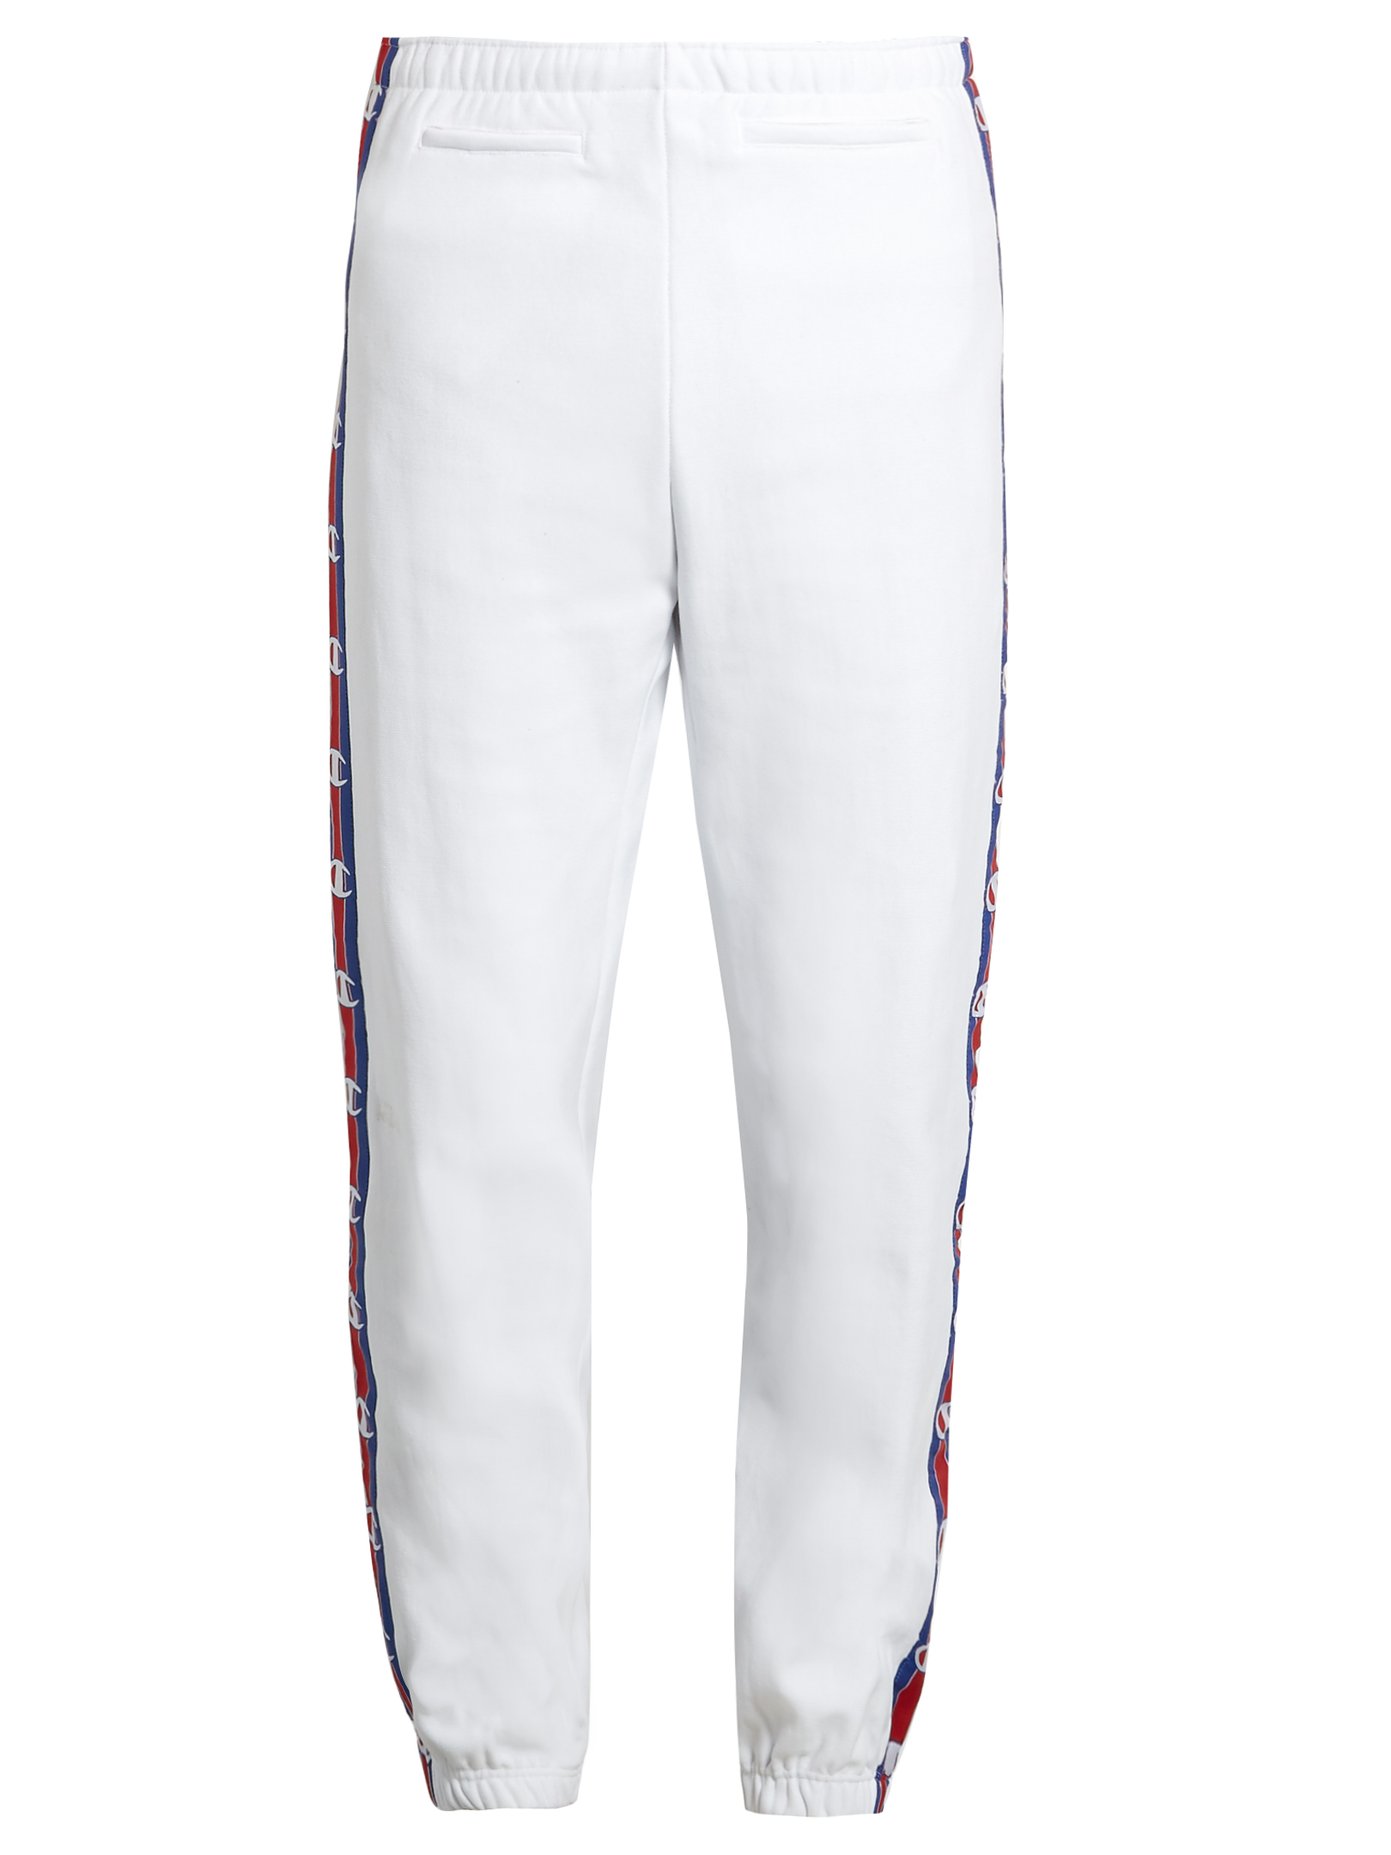 white champion track pants